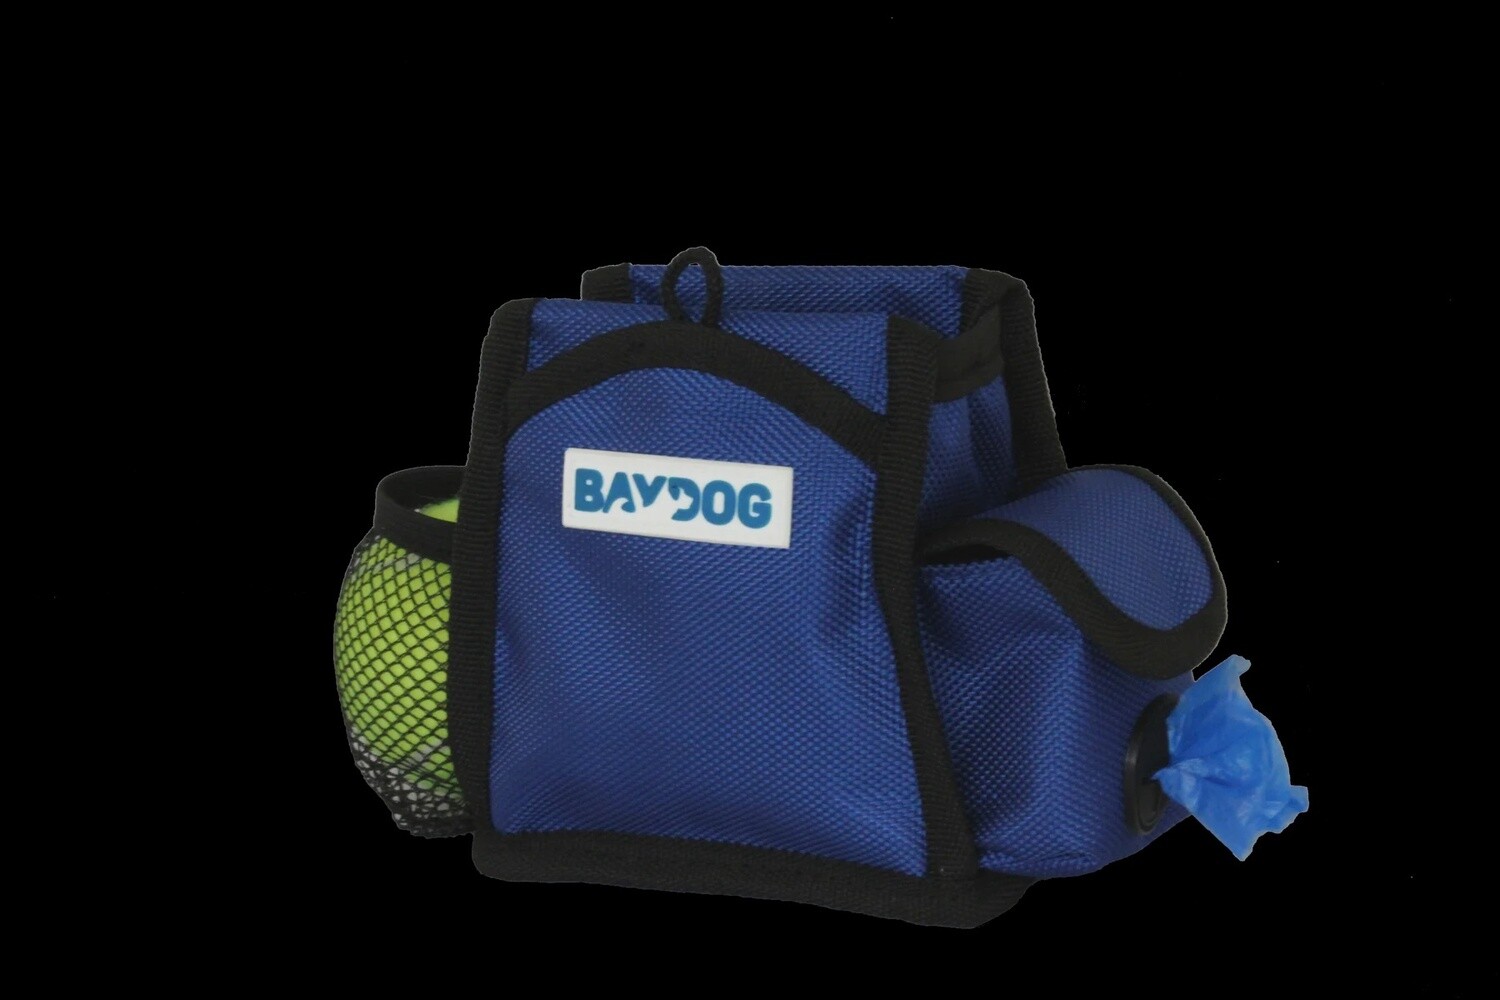 Pack-N-Go, Colour: Baydog Blue